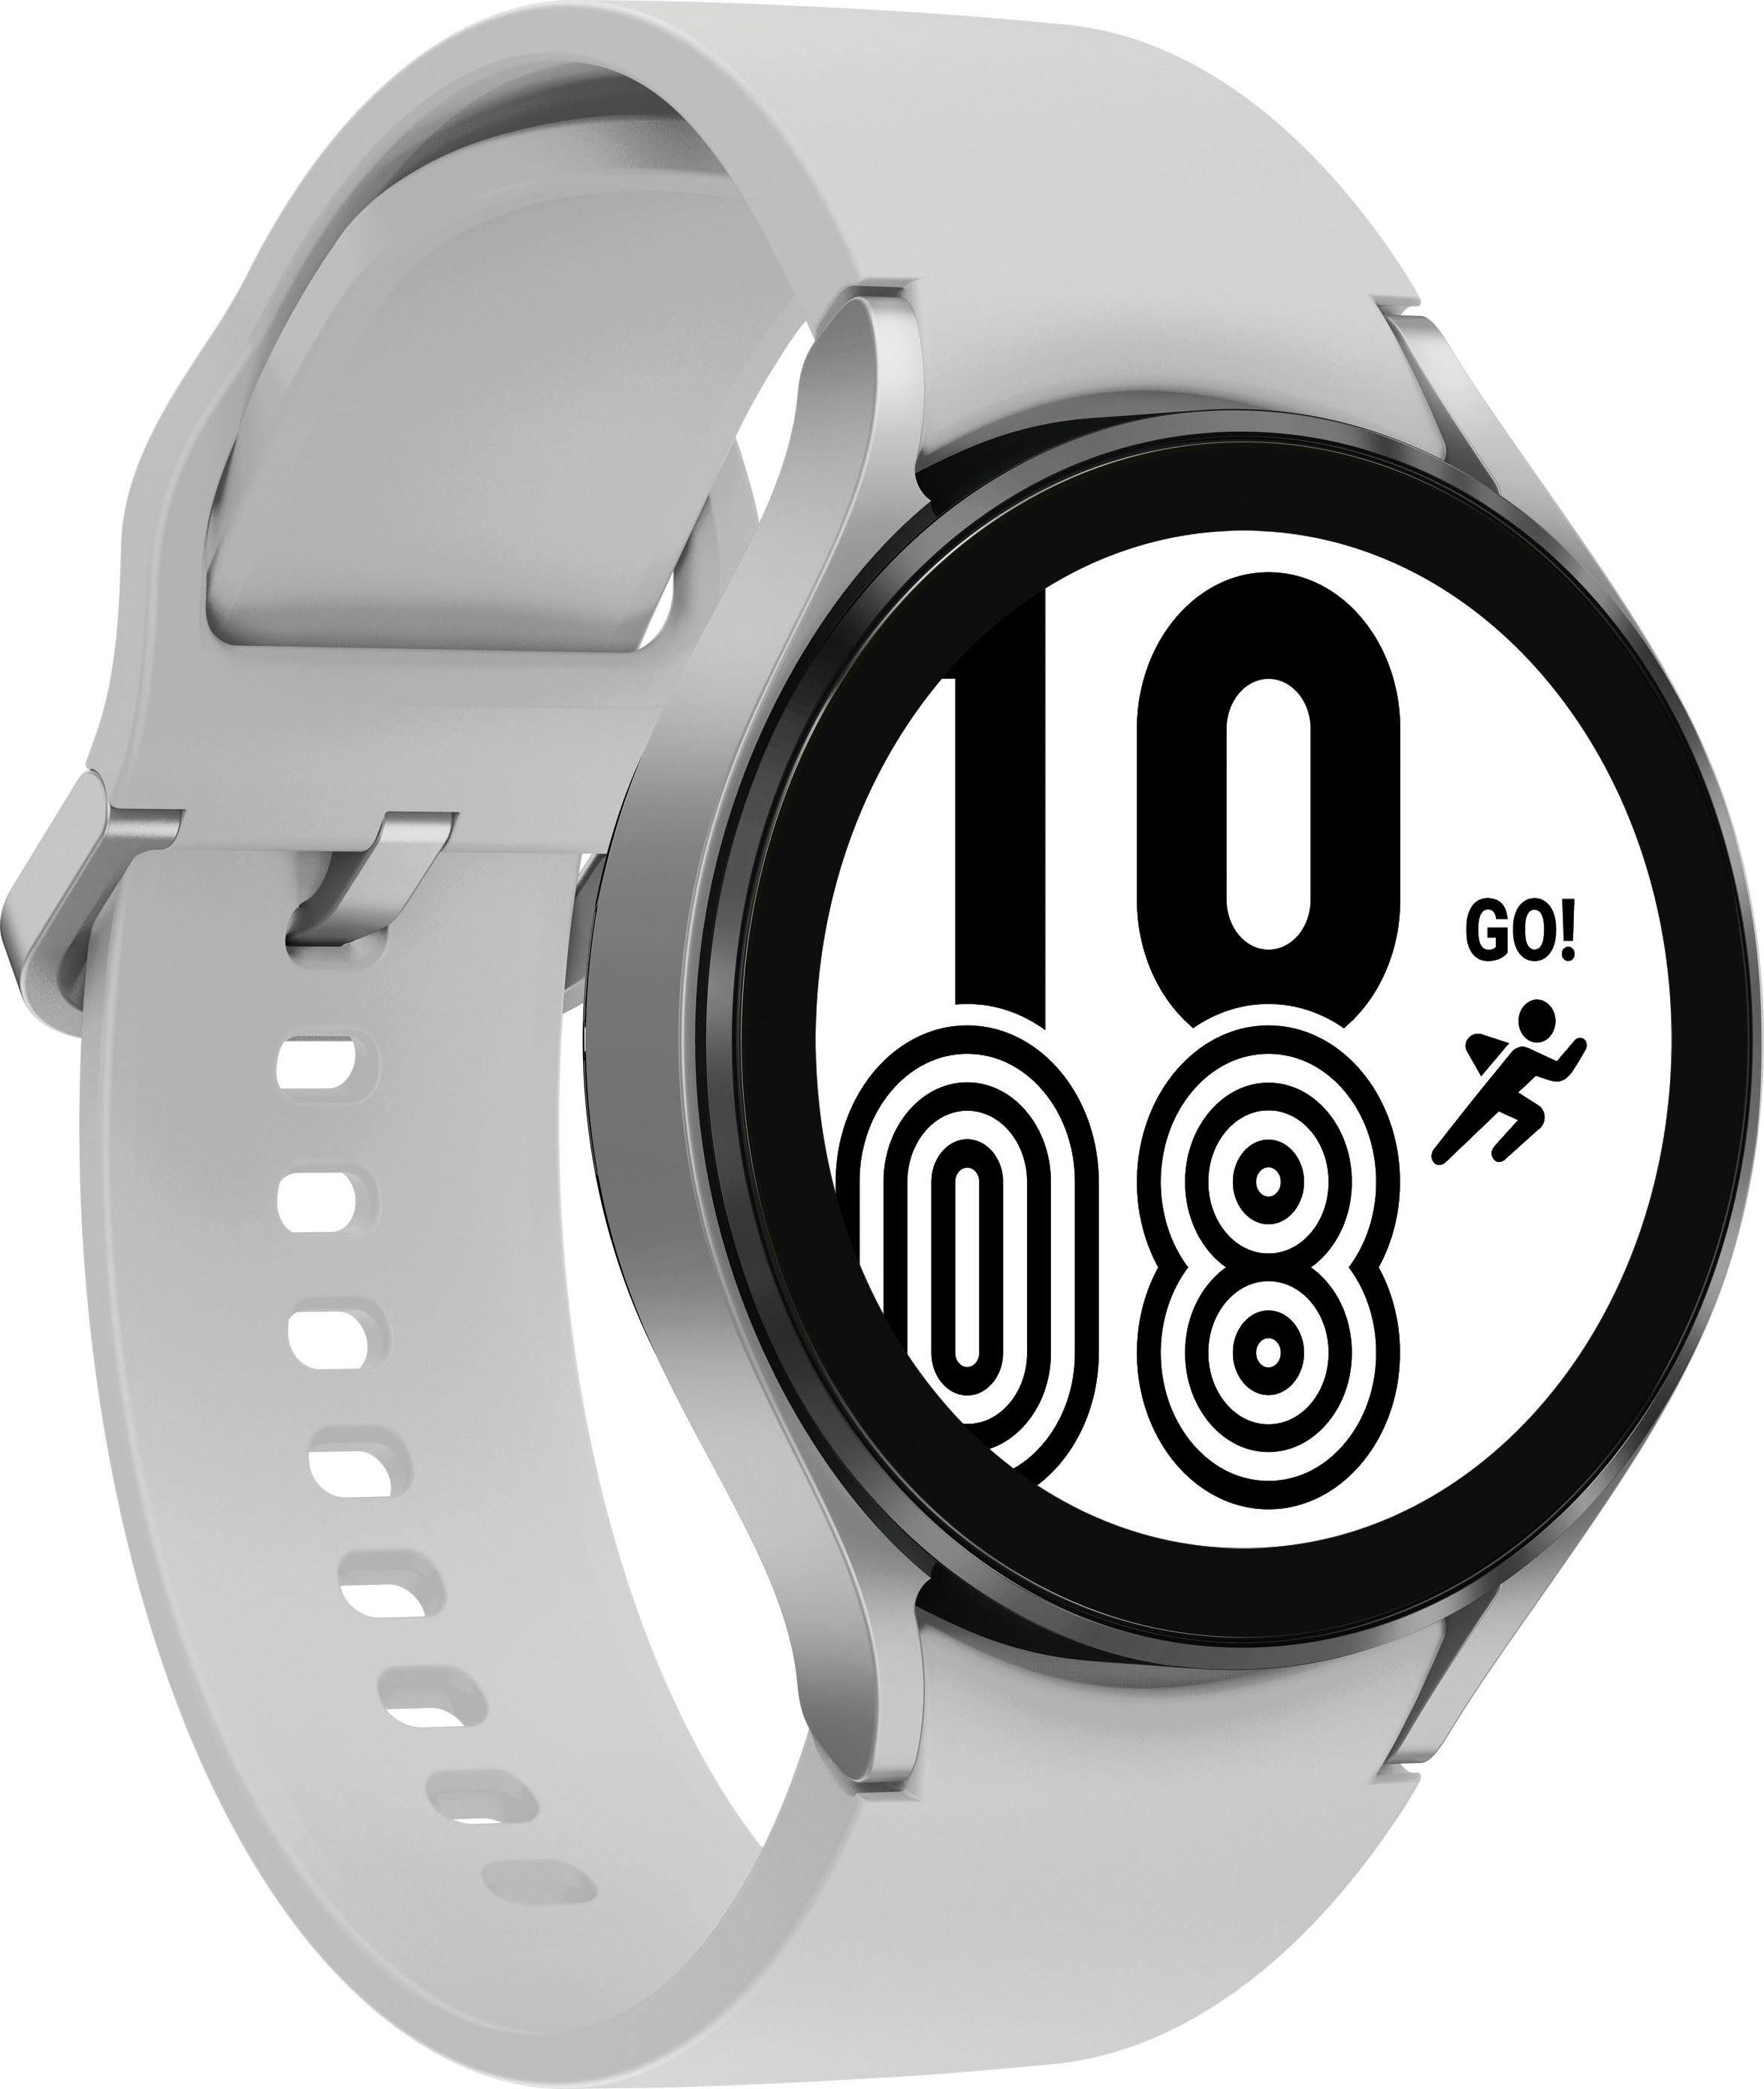 Galaxy Uhr, Samsung Watch Fitness Smartwatch Gesundheitsfunktionen Wear 4 by OS 44mm Tracker, Zoll, LTE Google), (1,4 Fitness